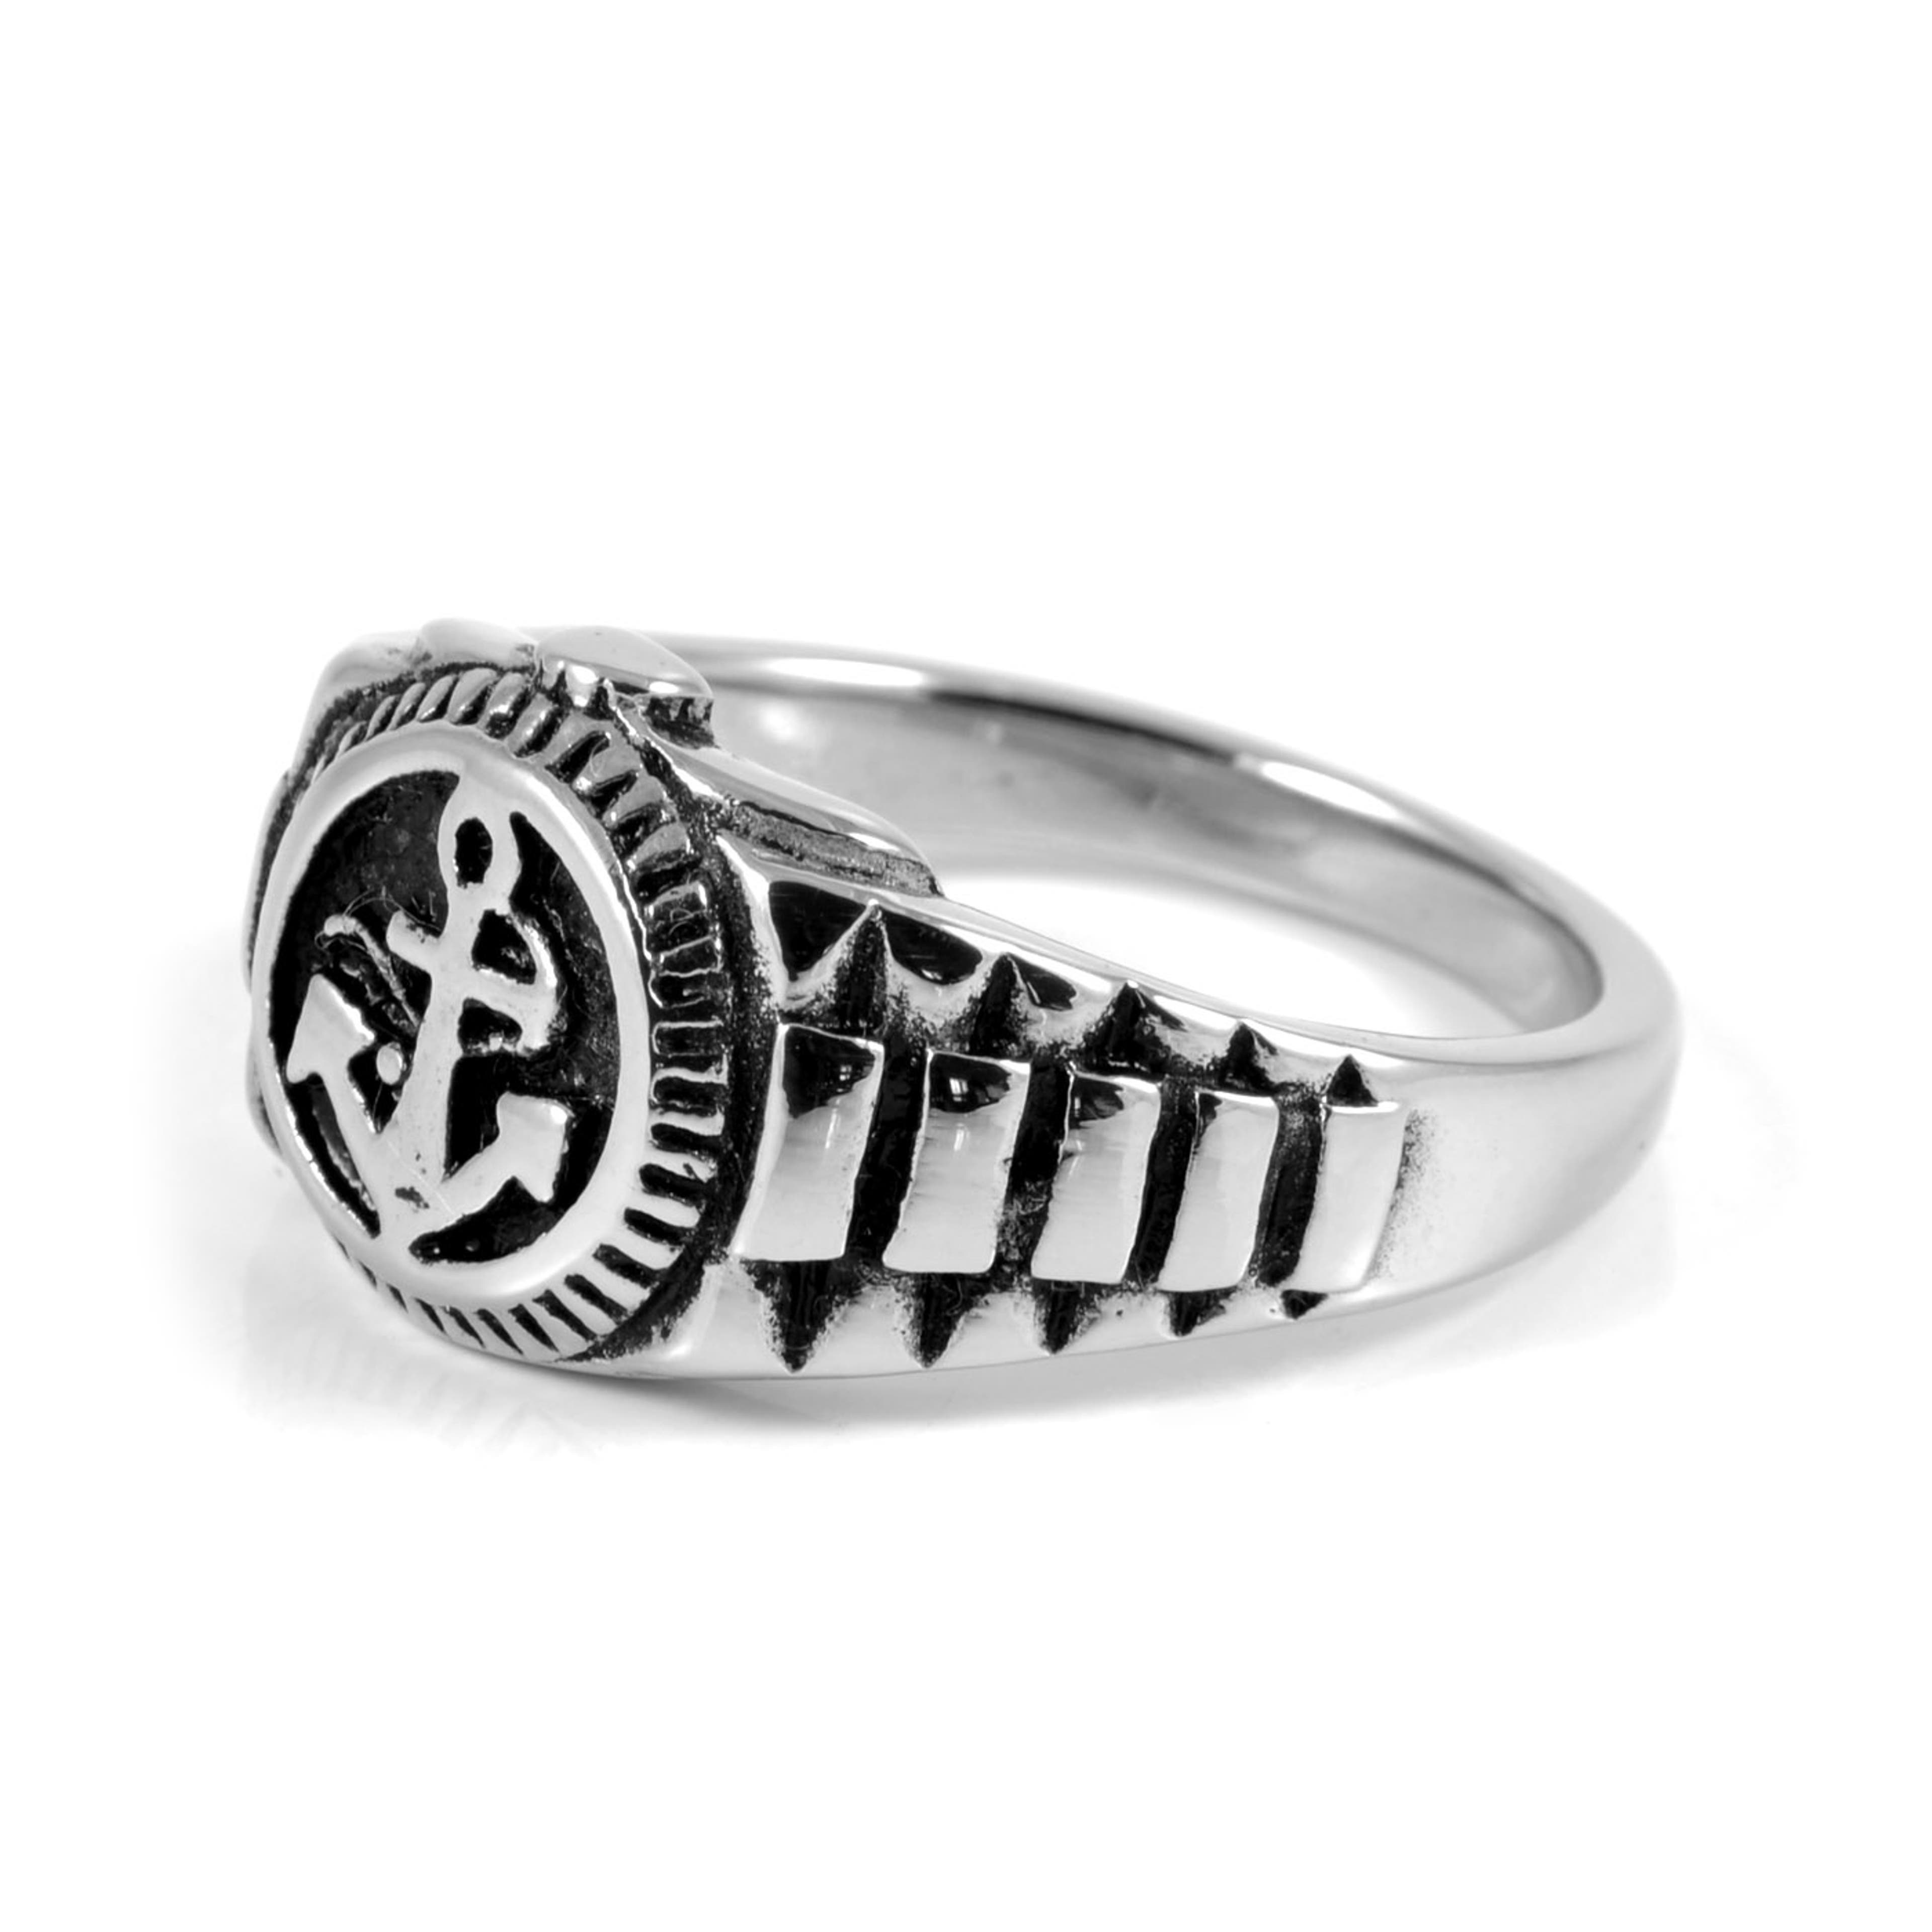 Sailor Steel Ring